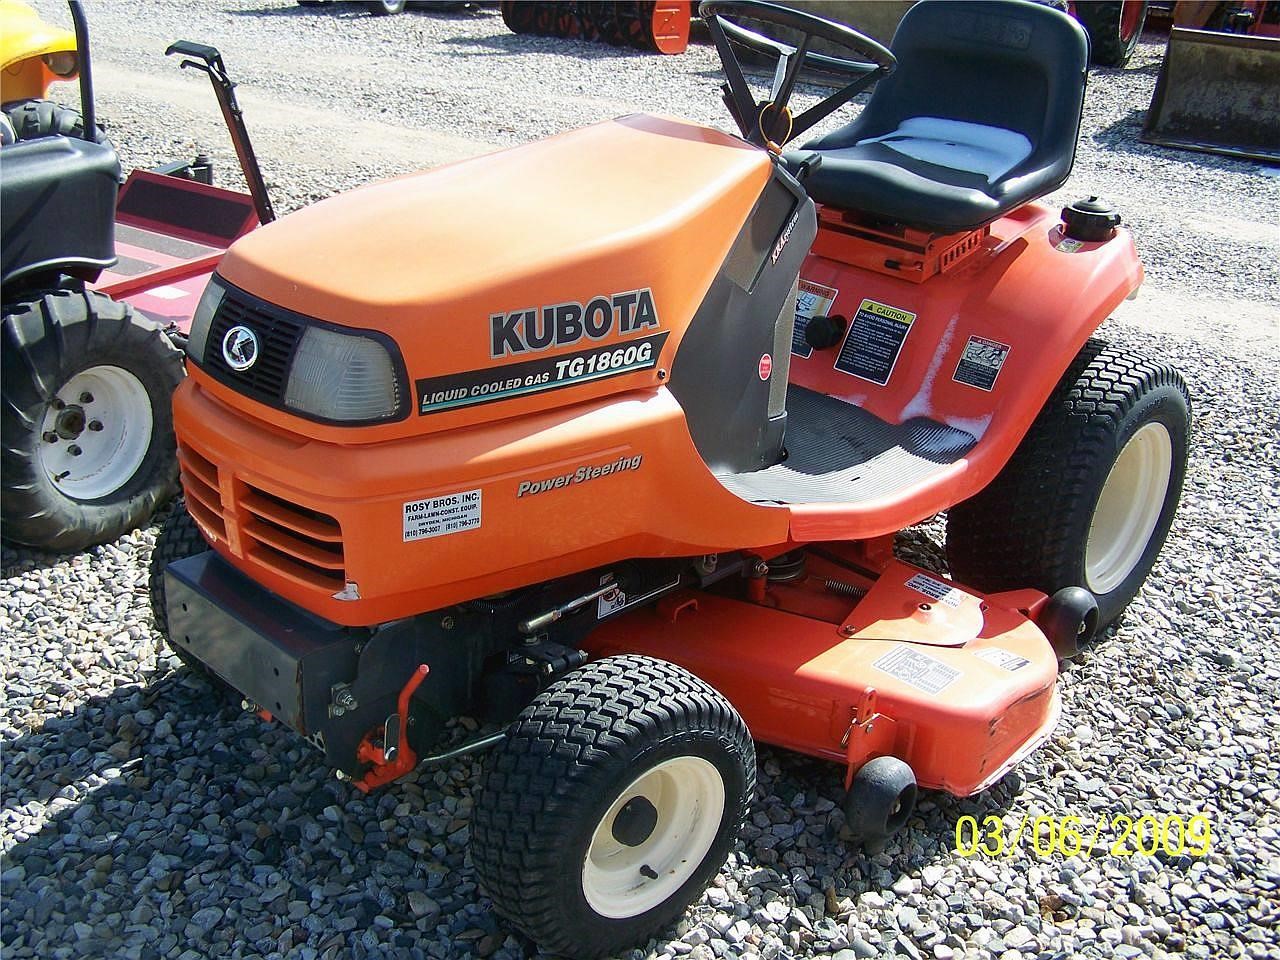 KUBOTA TG1860G Riding Lawn Mower | 201 hrs. $2,950.00